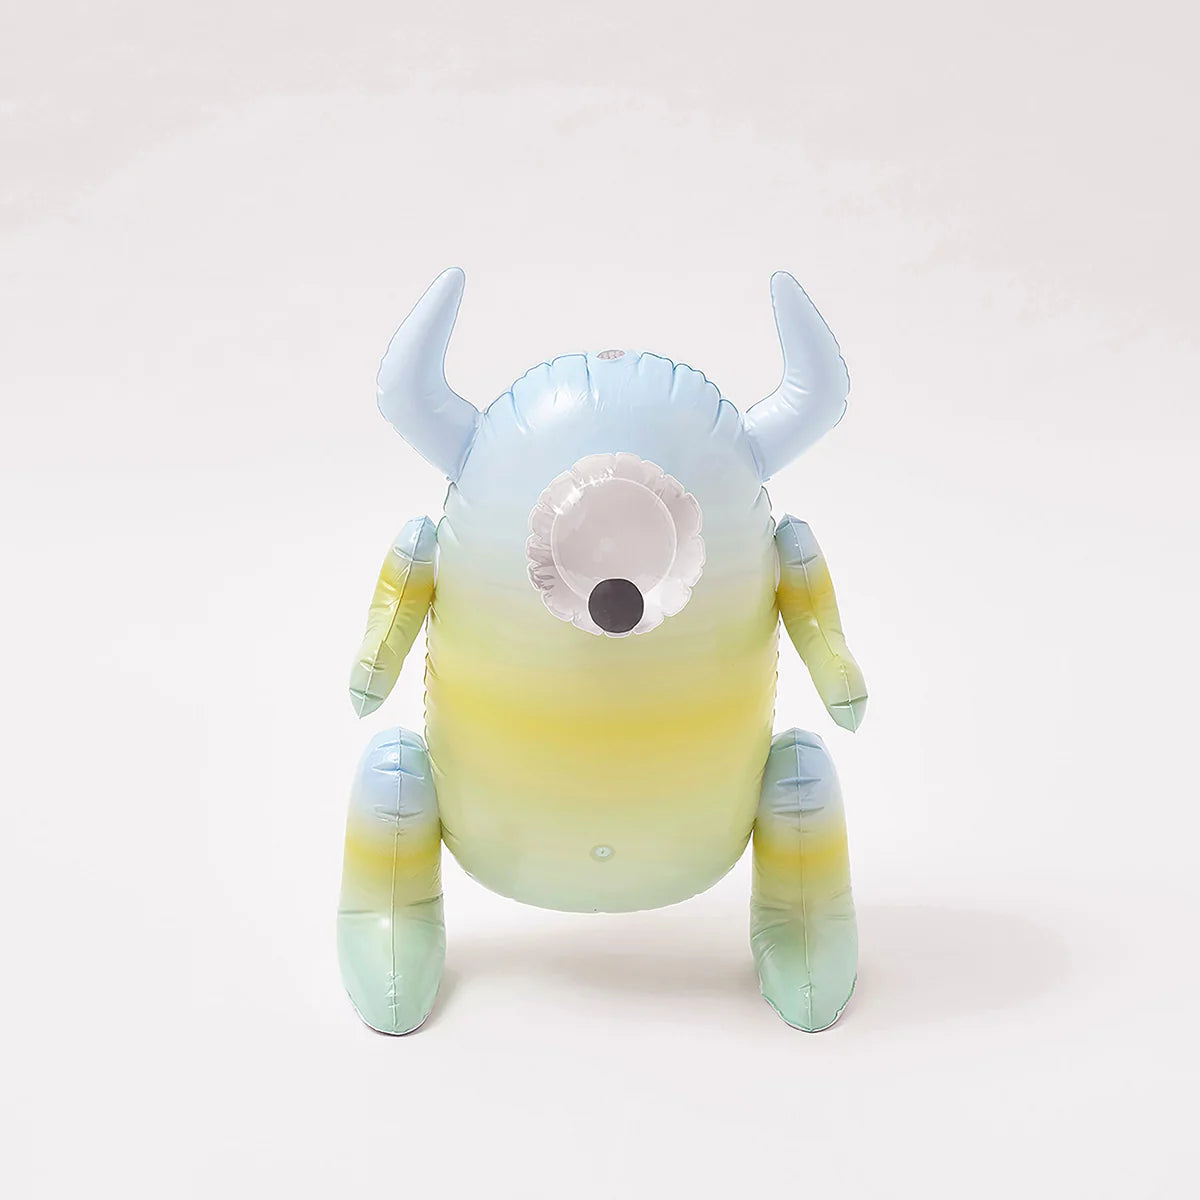 Inflatable Sprinkler - Monty the monster